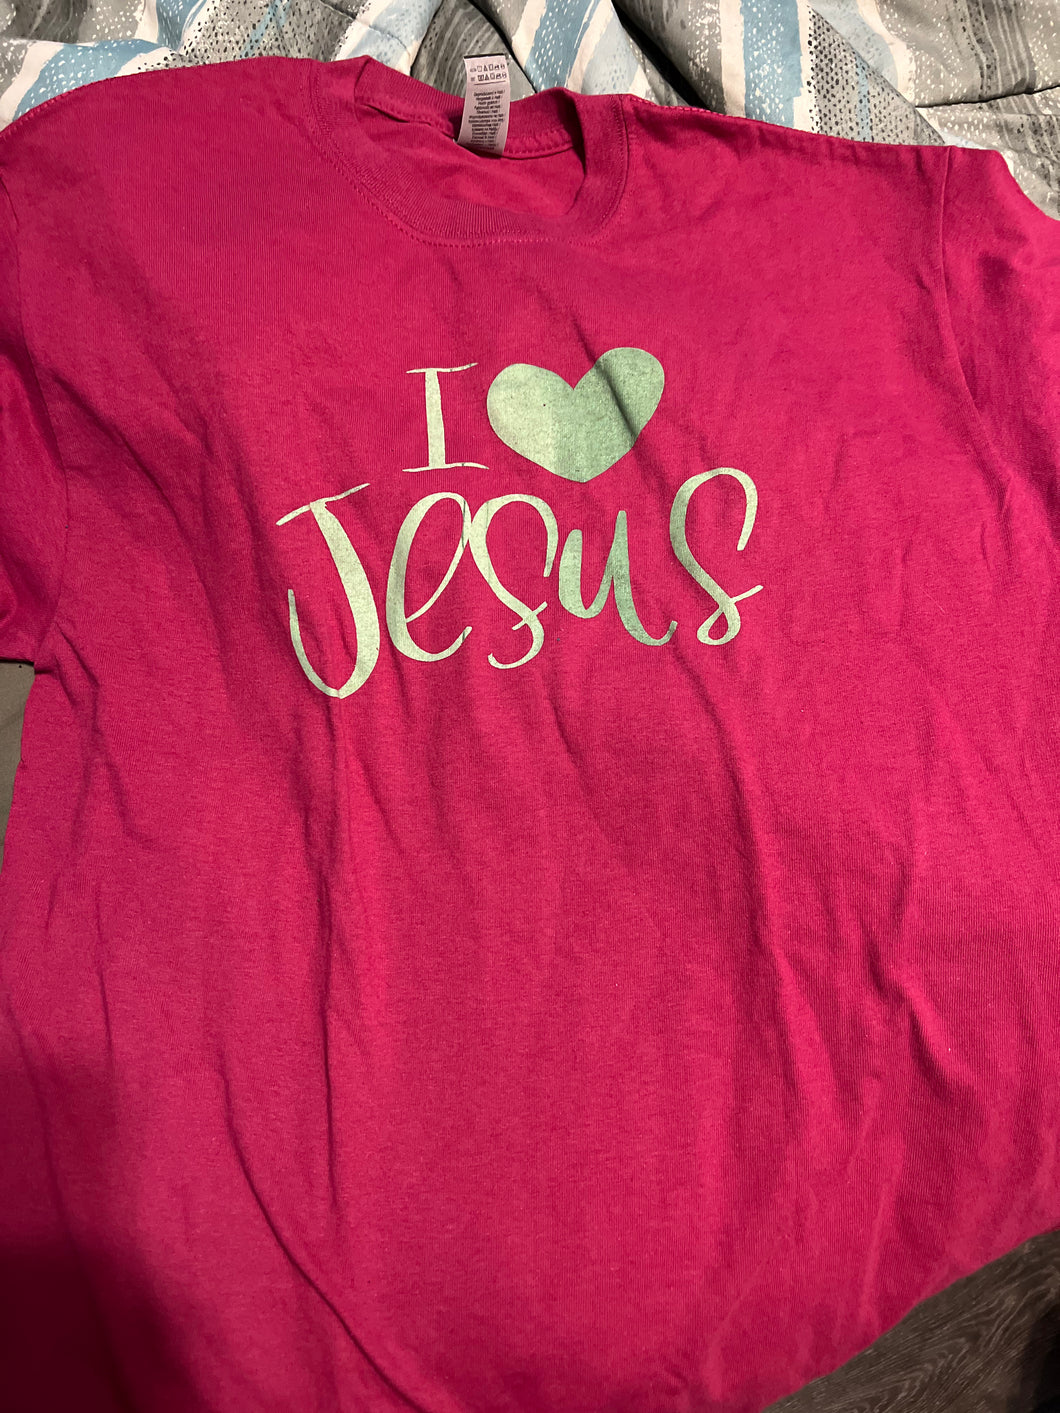 I Heart Jesus (T-Shirt) Pink/Green